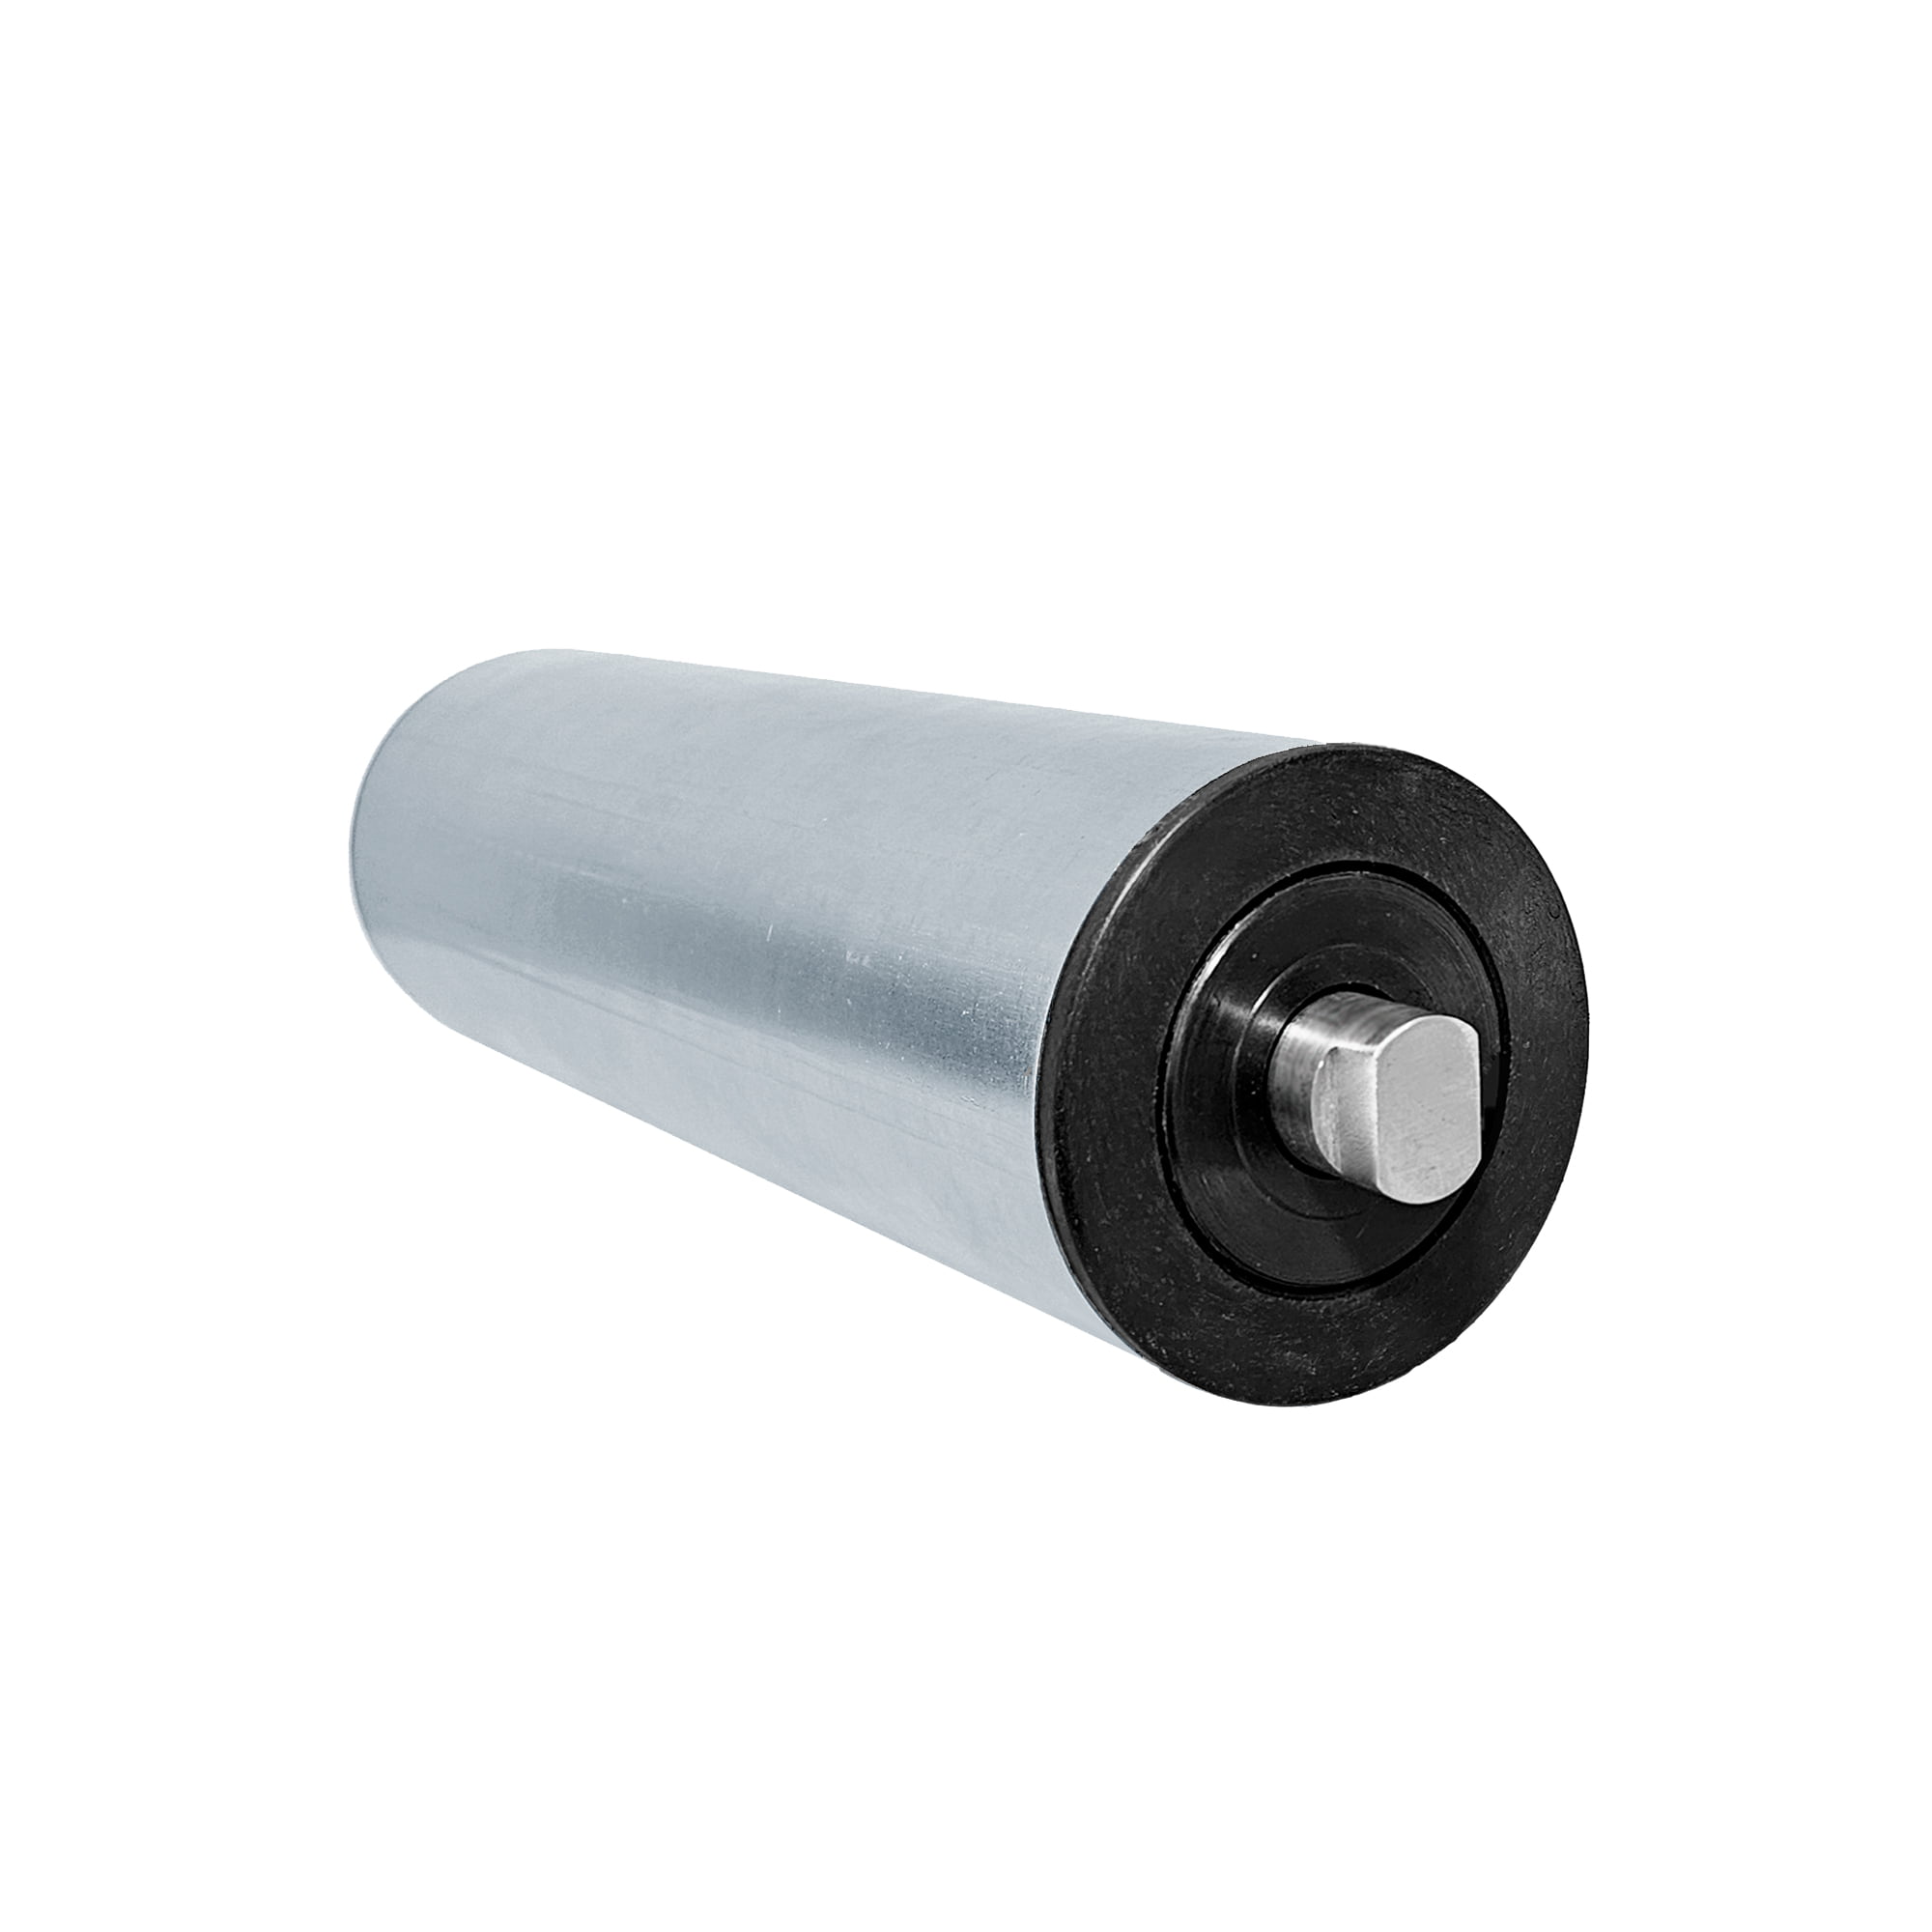 Rolete de Carga - Diâmetro tubo 76,2 mm - Comprimento tubo 545 mm